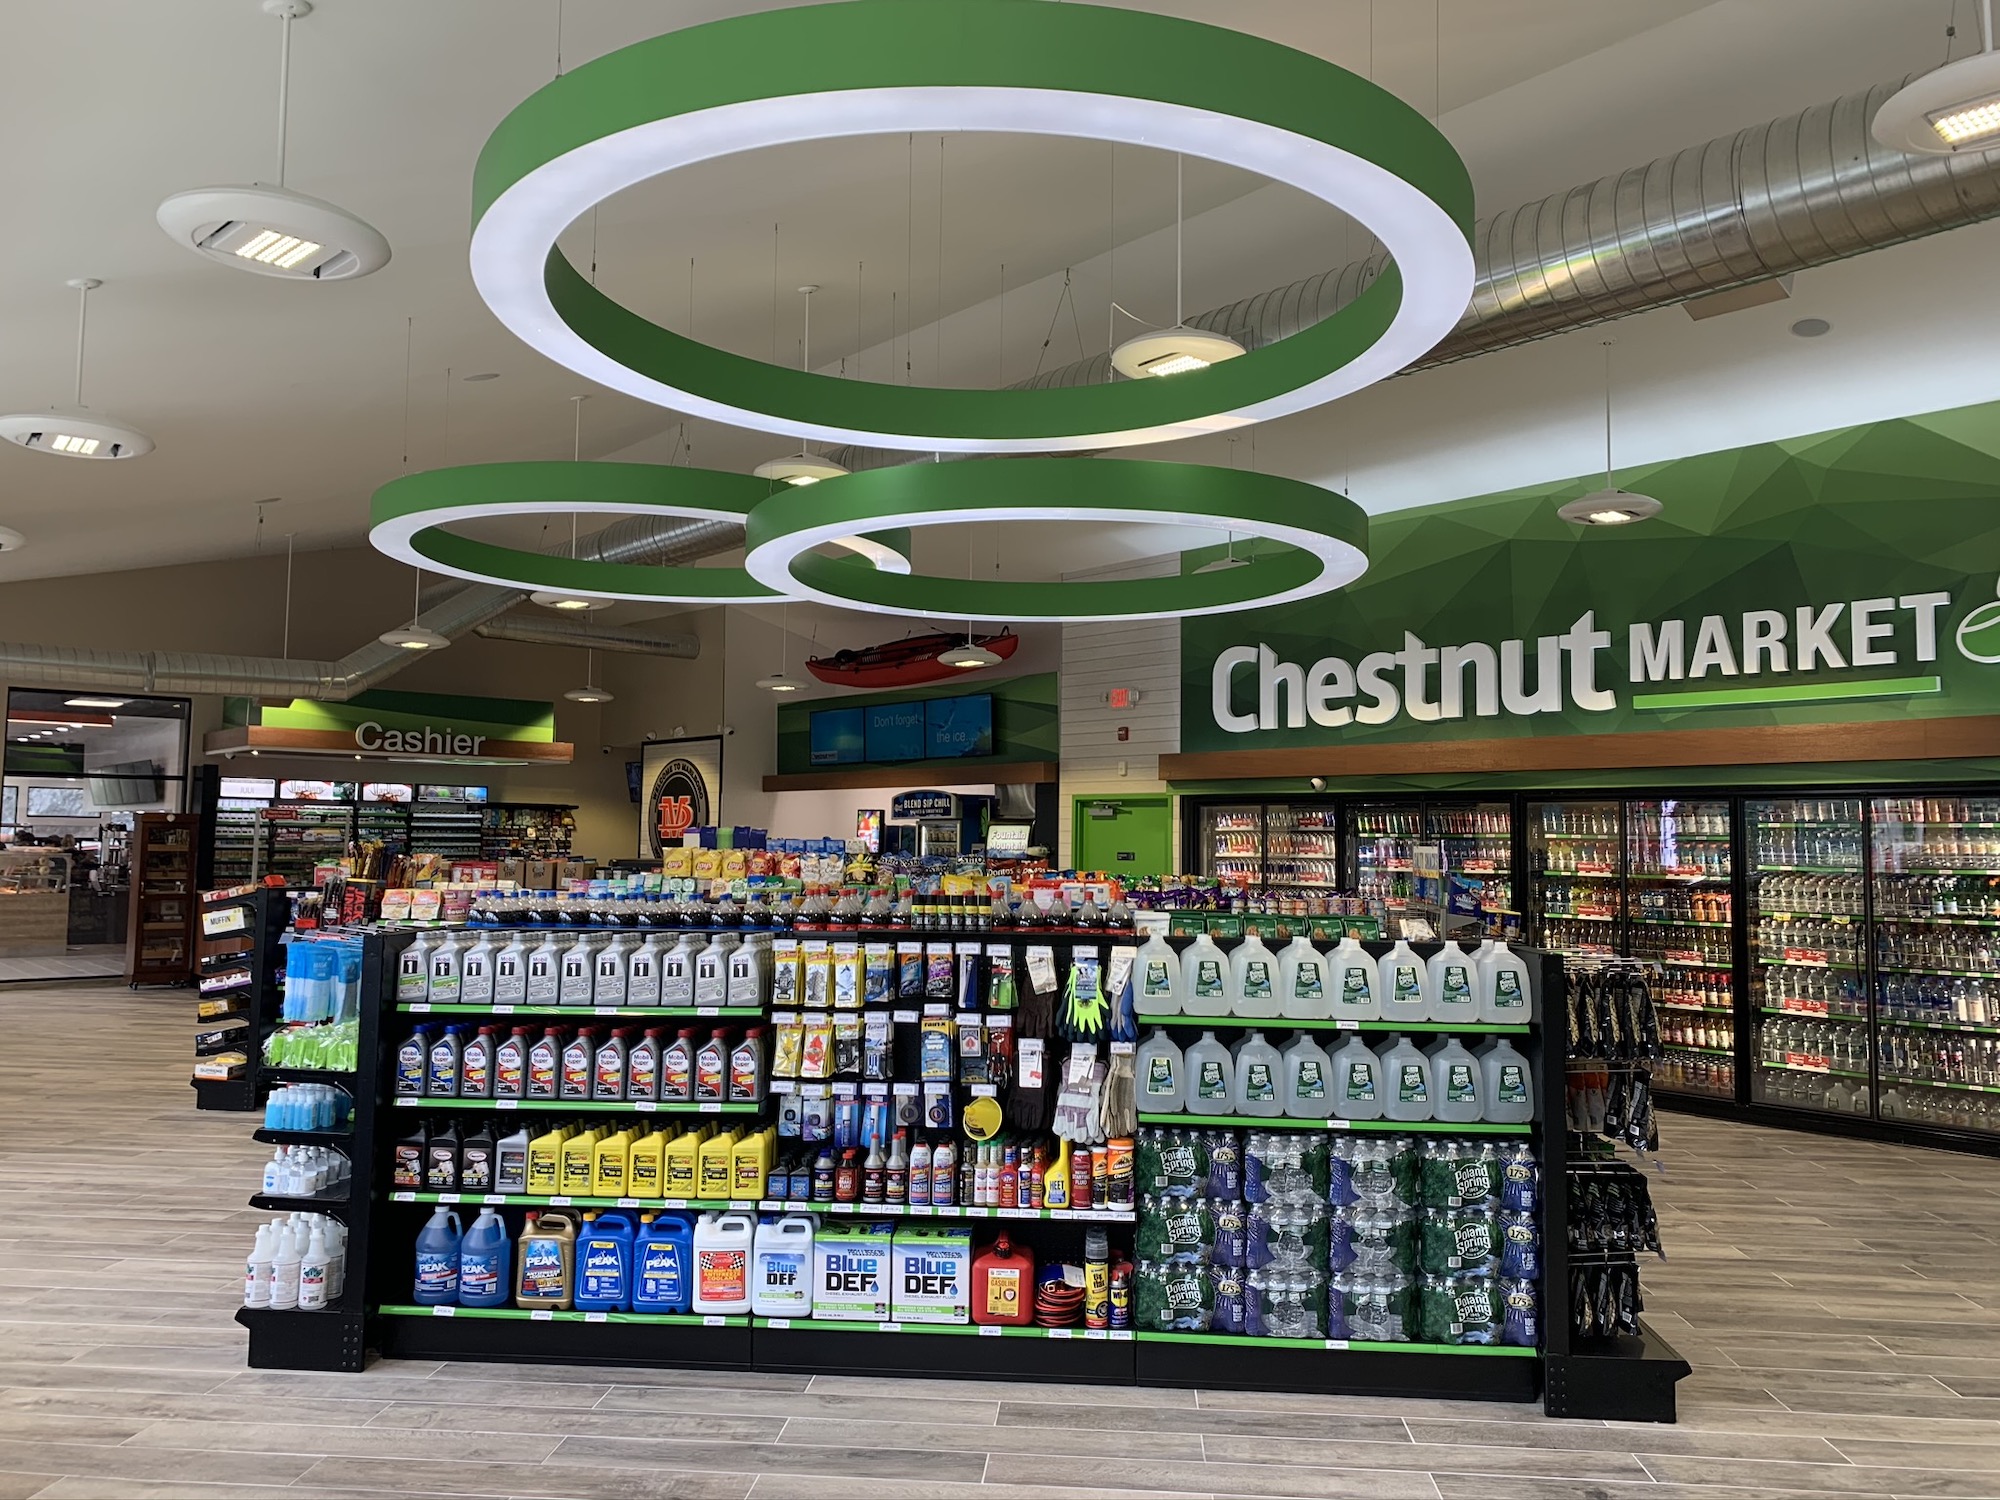 Chestnut Market store interior rebrand